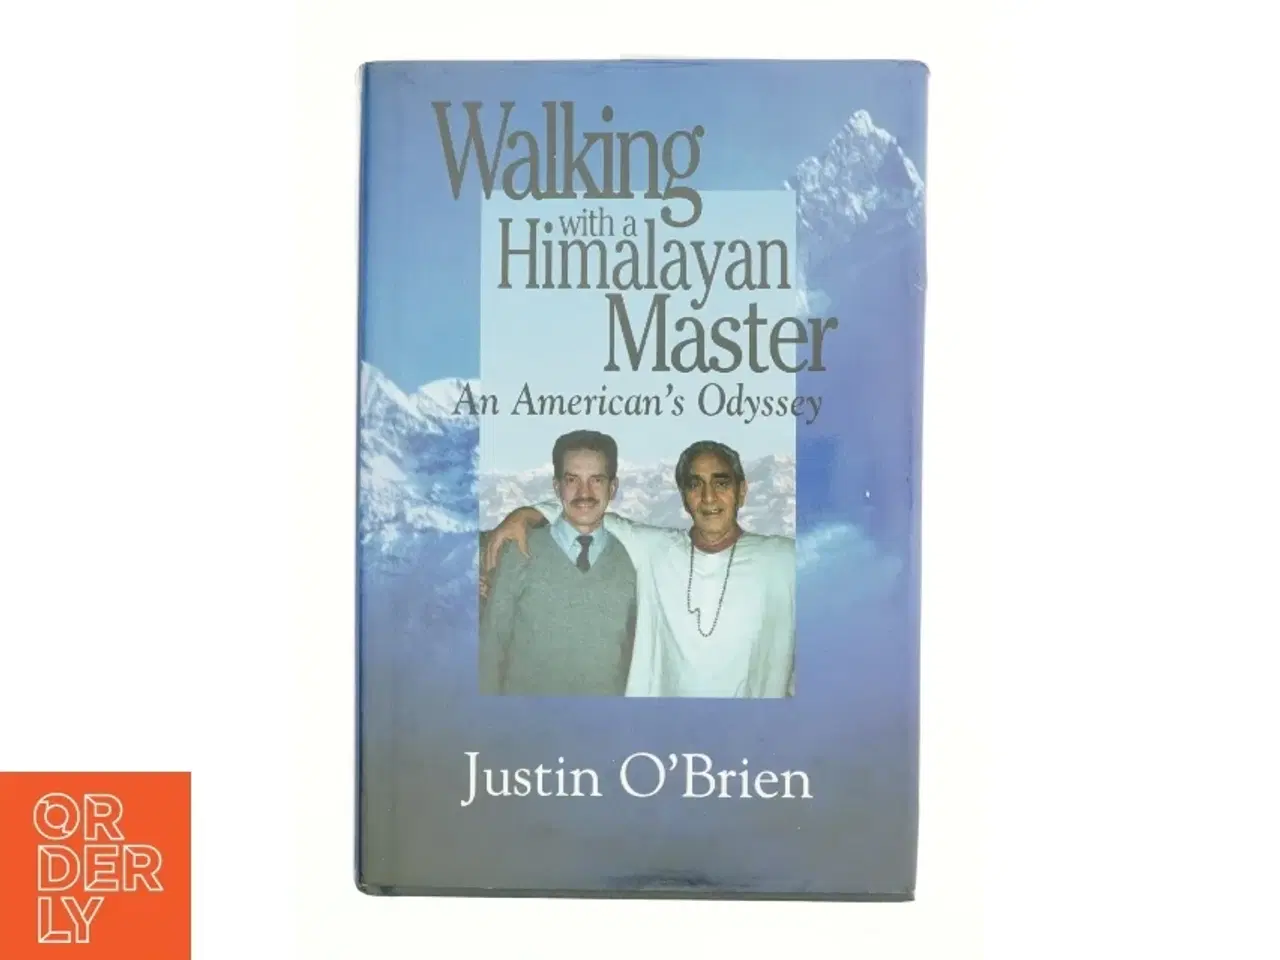 Billede 1 - Walking with a Himalayan Master: an American's Odyssey af O'Brian, Justin / C'Brien, Justin / O'Brien, Justin (Bog)